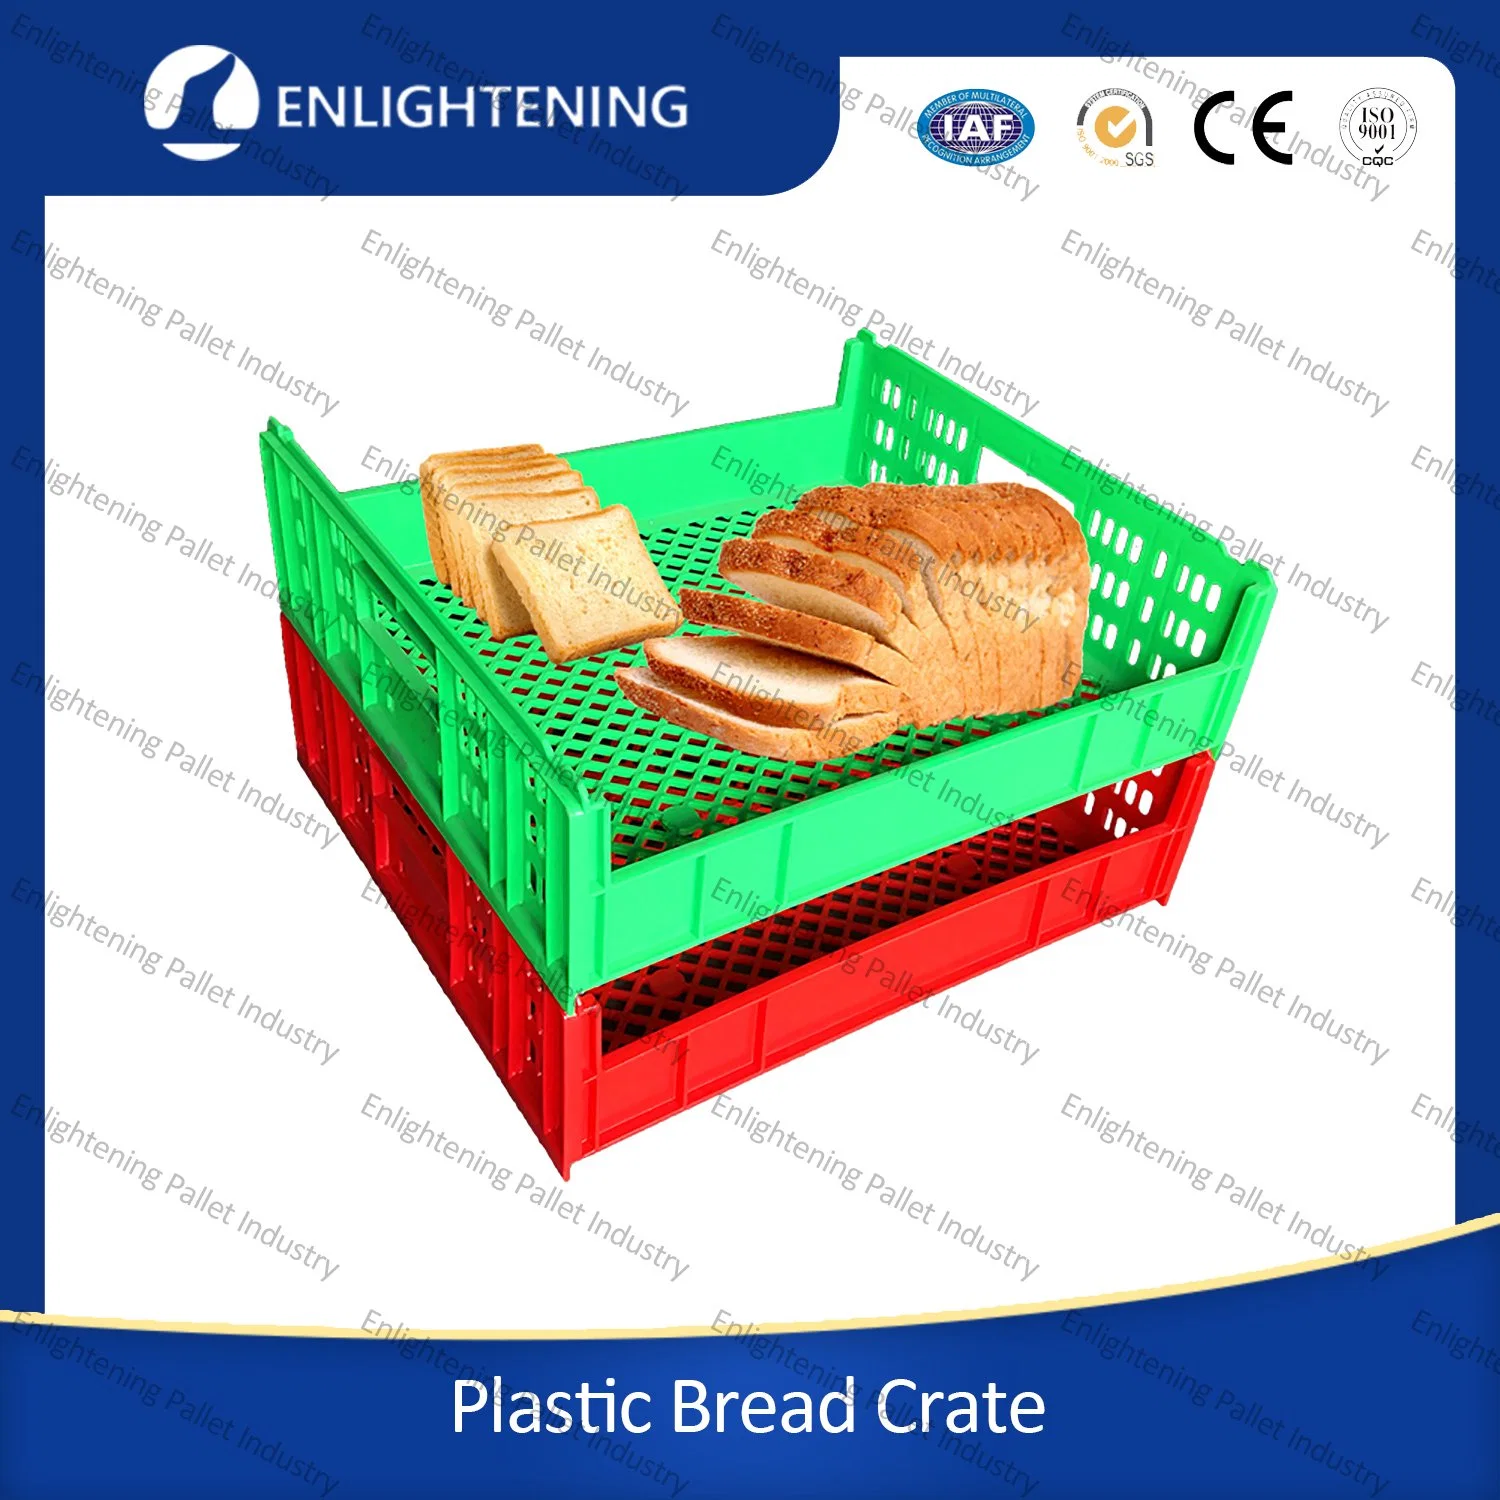 Industrial Agricultural Plastic Large Plastic Containers /Plastic Bread Crate/Plastic Crates for Bread/Plastic Bread Crate Mold/Bread Bin for Cooler Storage